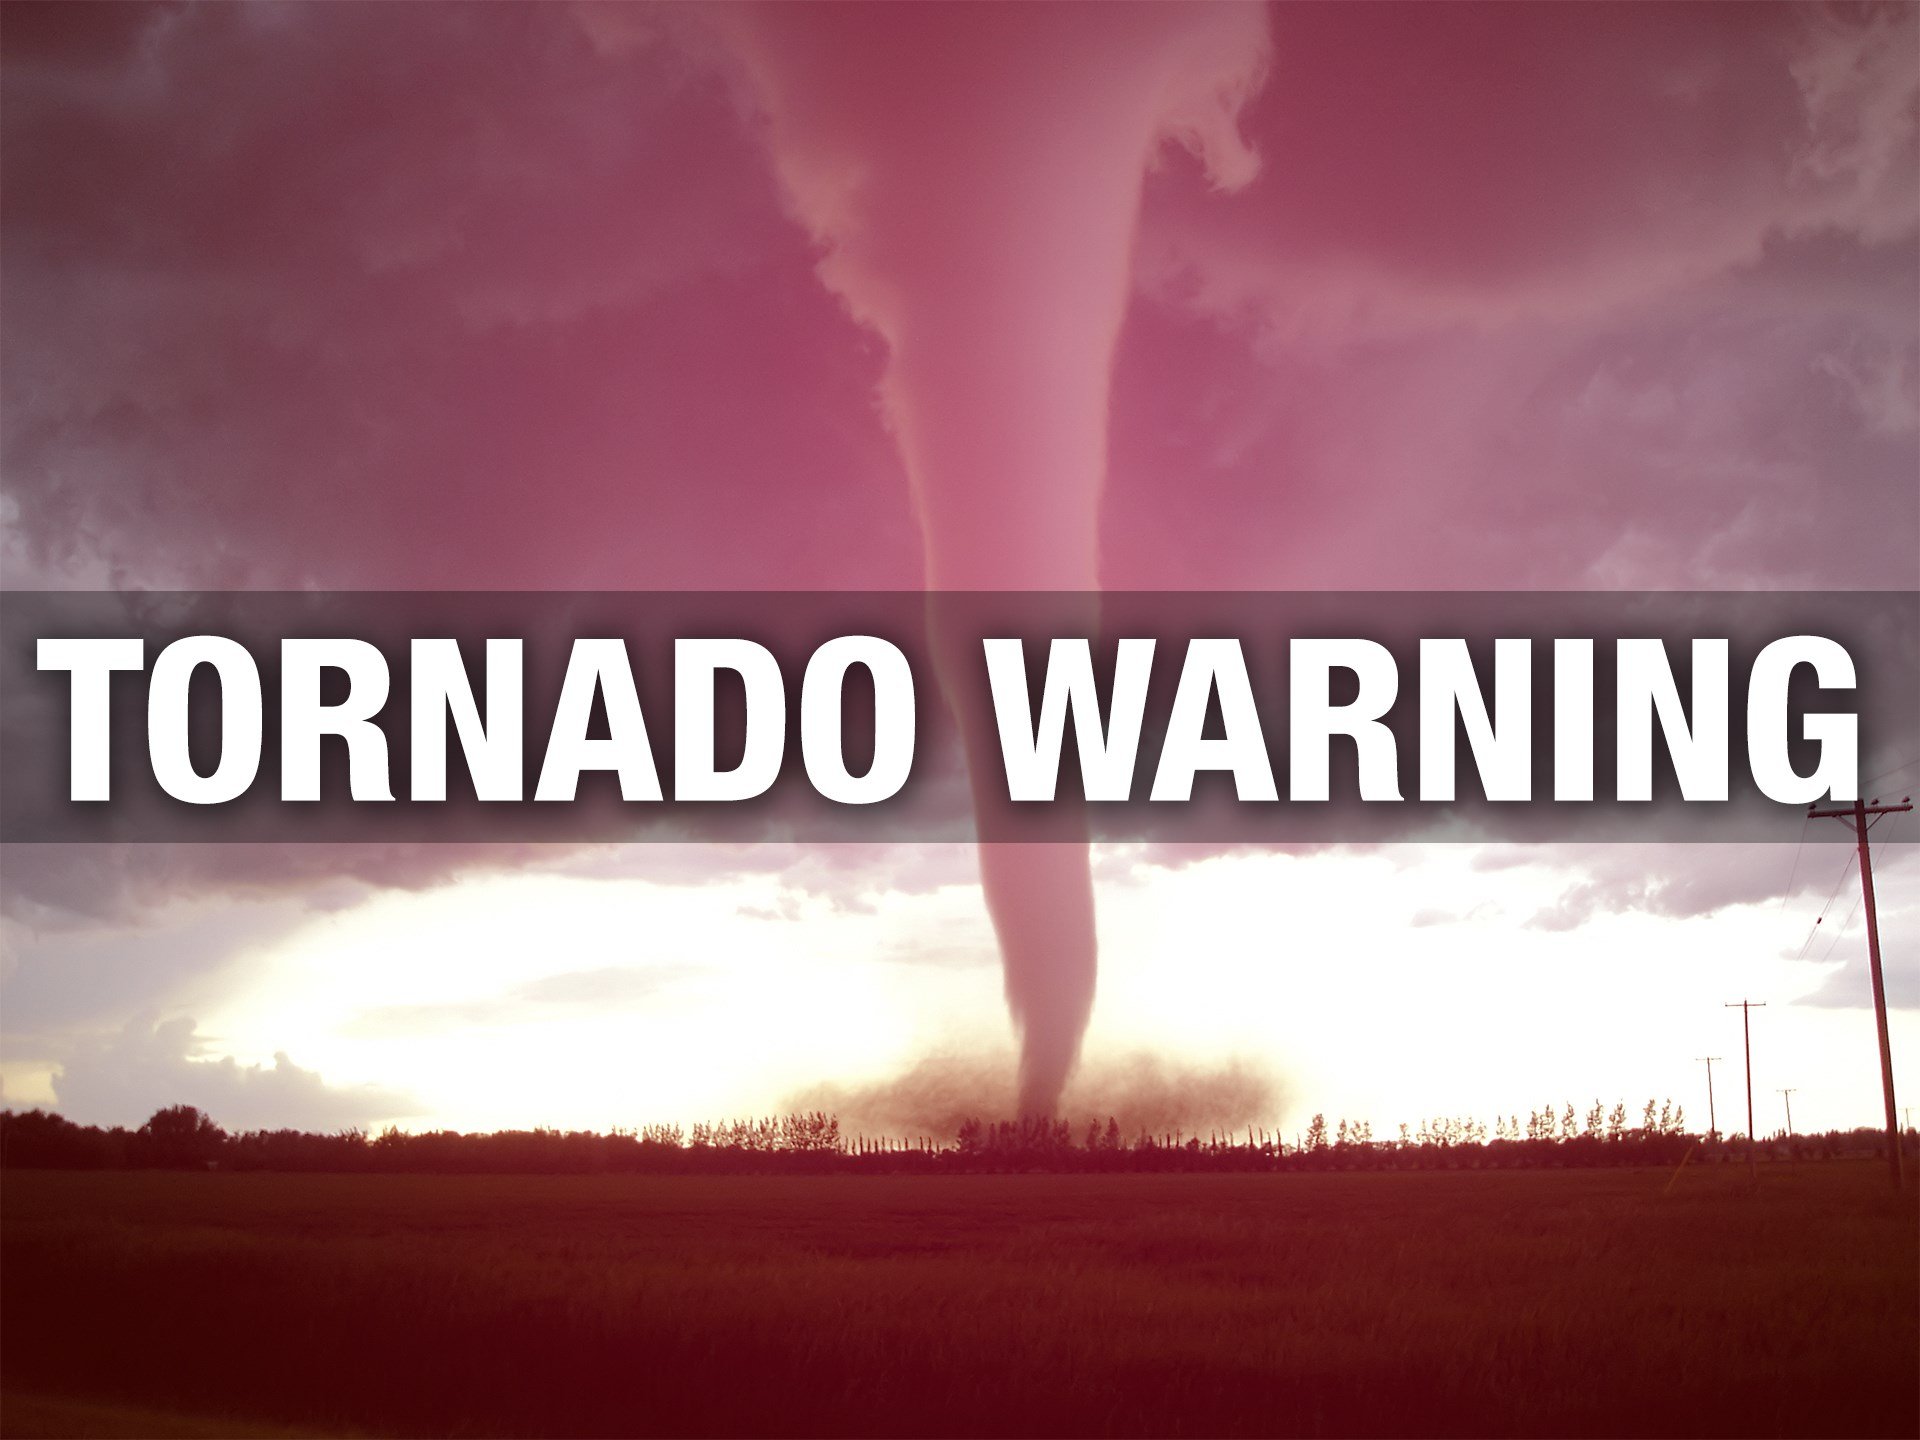 UPDATE BREAKING WEATHER ALERT Tornado Warning for parts of Uma NBC